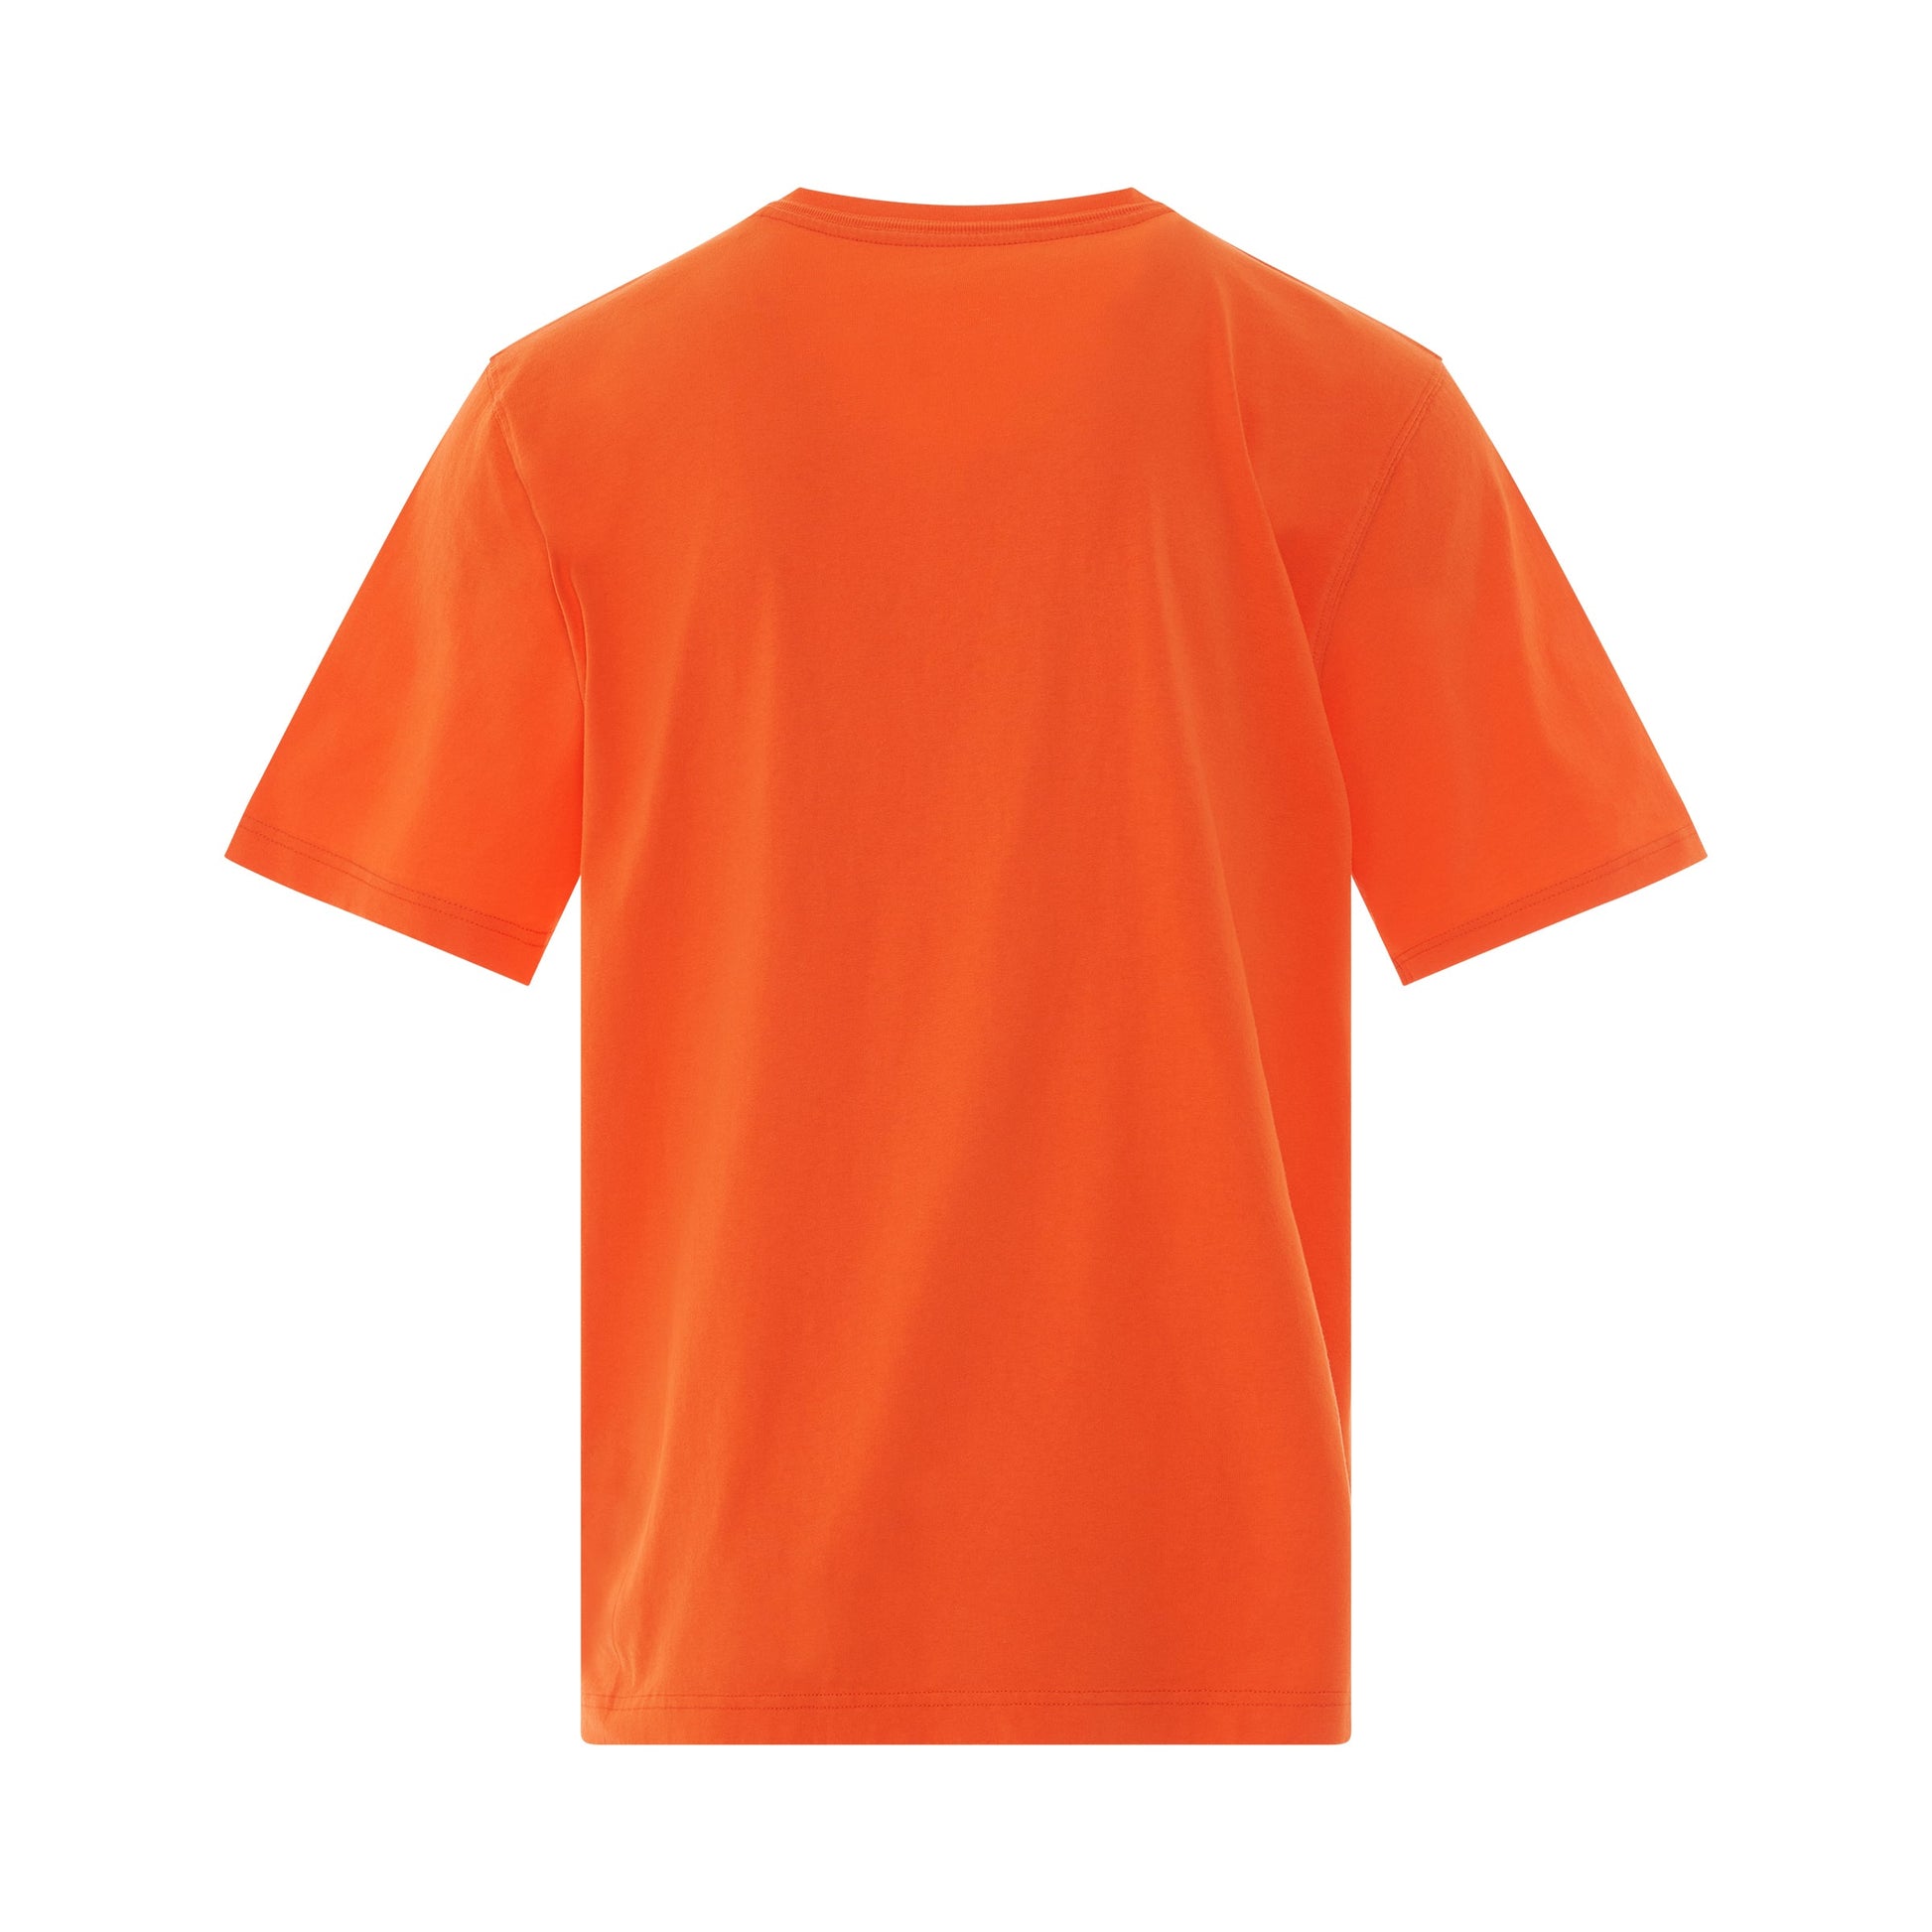 Heron Preston CTNMB T-Shirt - S - Escape Menswear